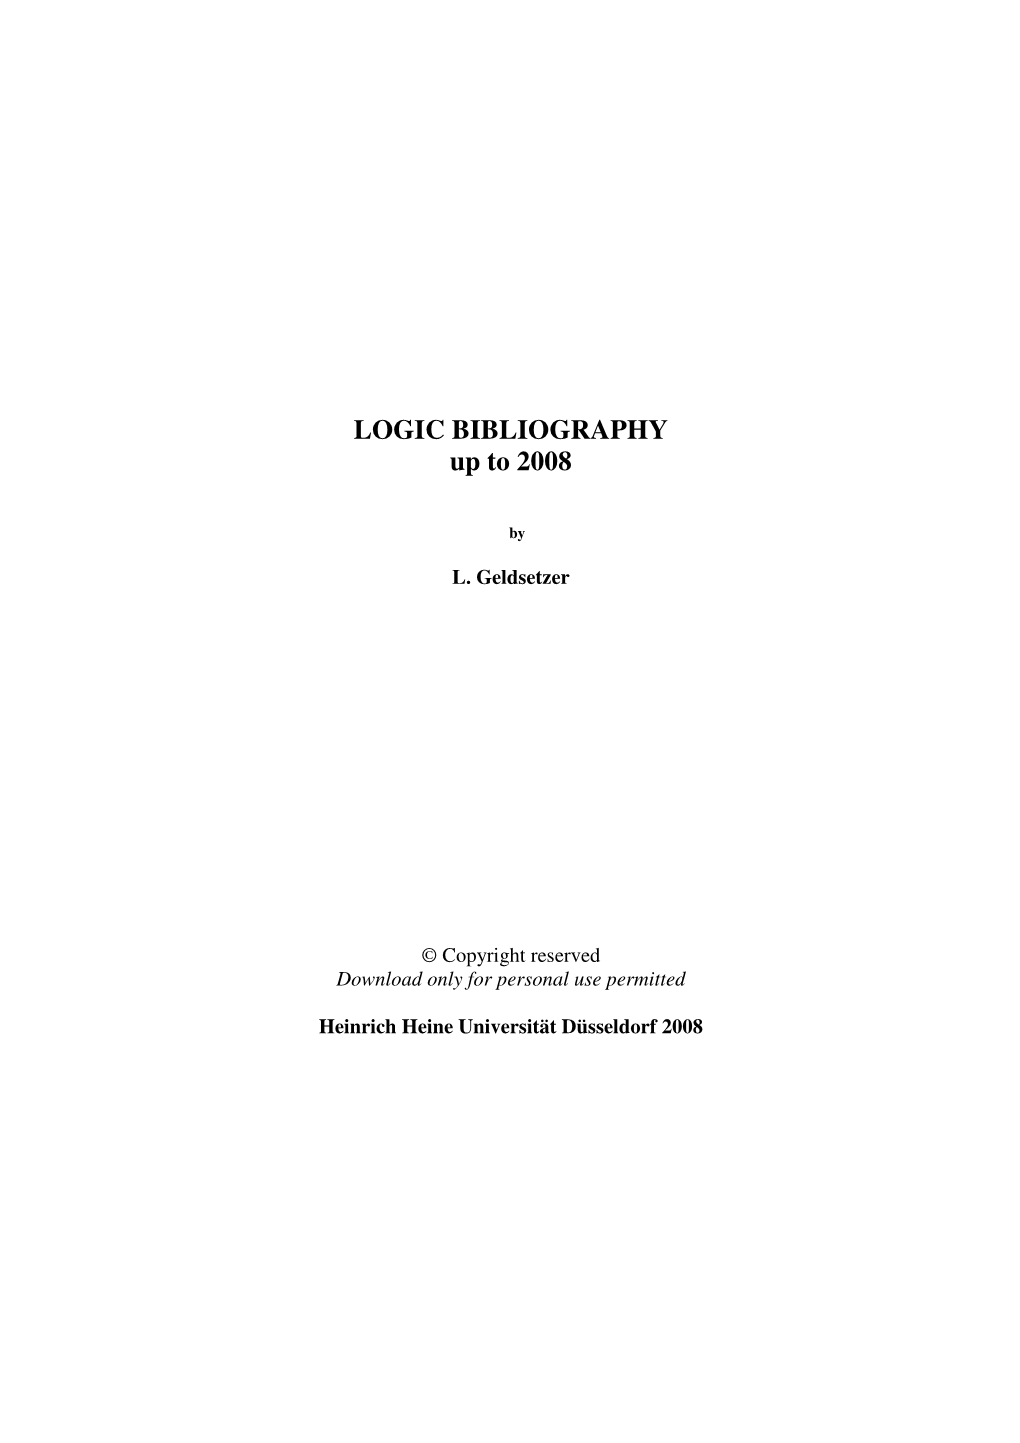 LOGIC BIBLIOGRAPHY up to 2008